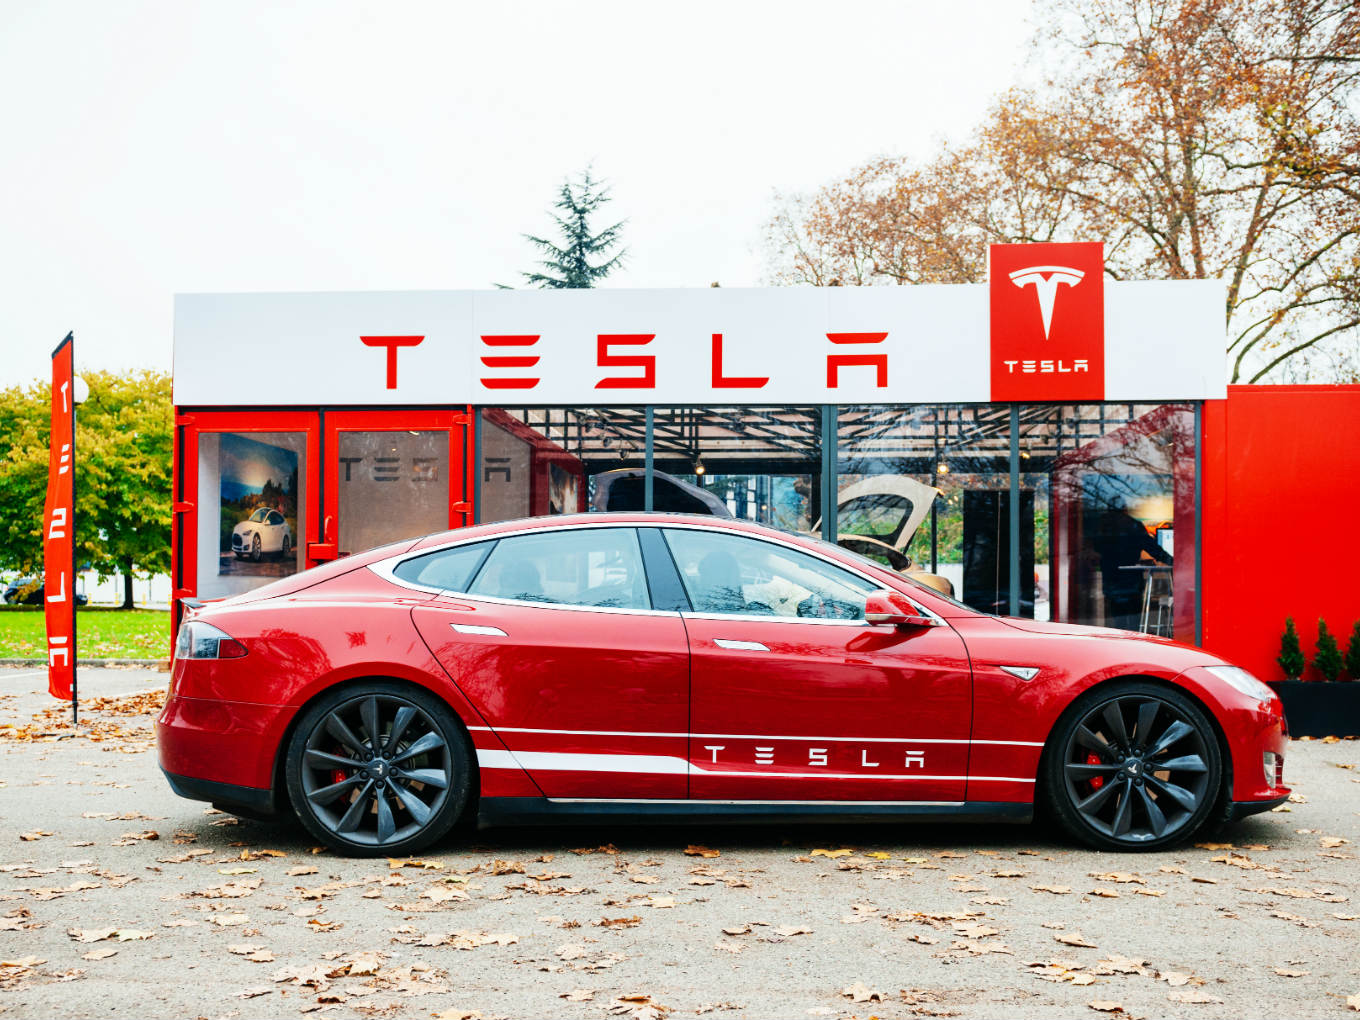 Ashok Leyland Invites Tesla Elon Musk For Partnership To Help Deploy Tesla Cars In India